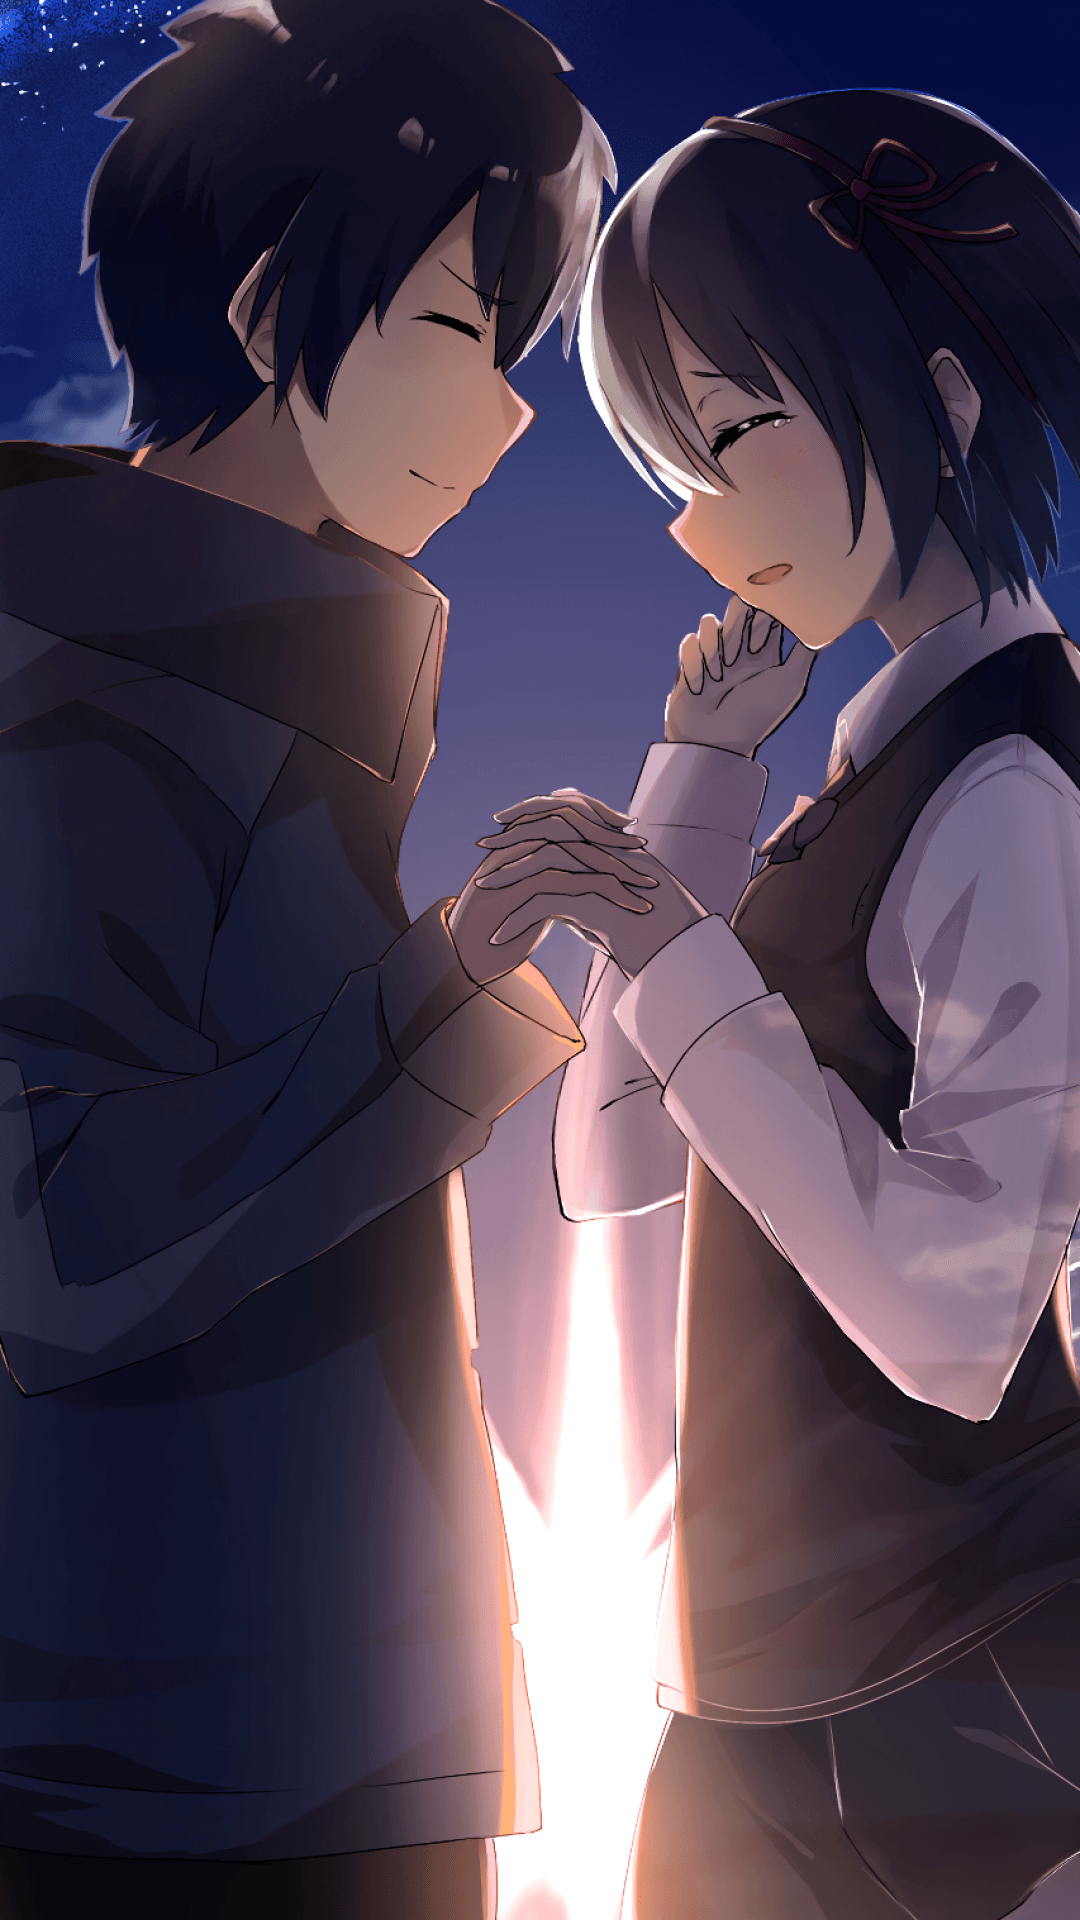 Anime couples by KurunomiBreaK on DeviantArt